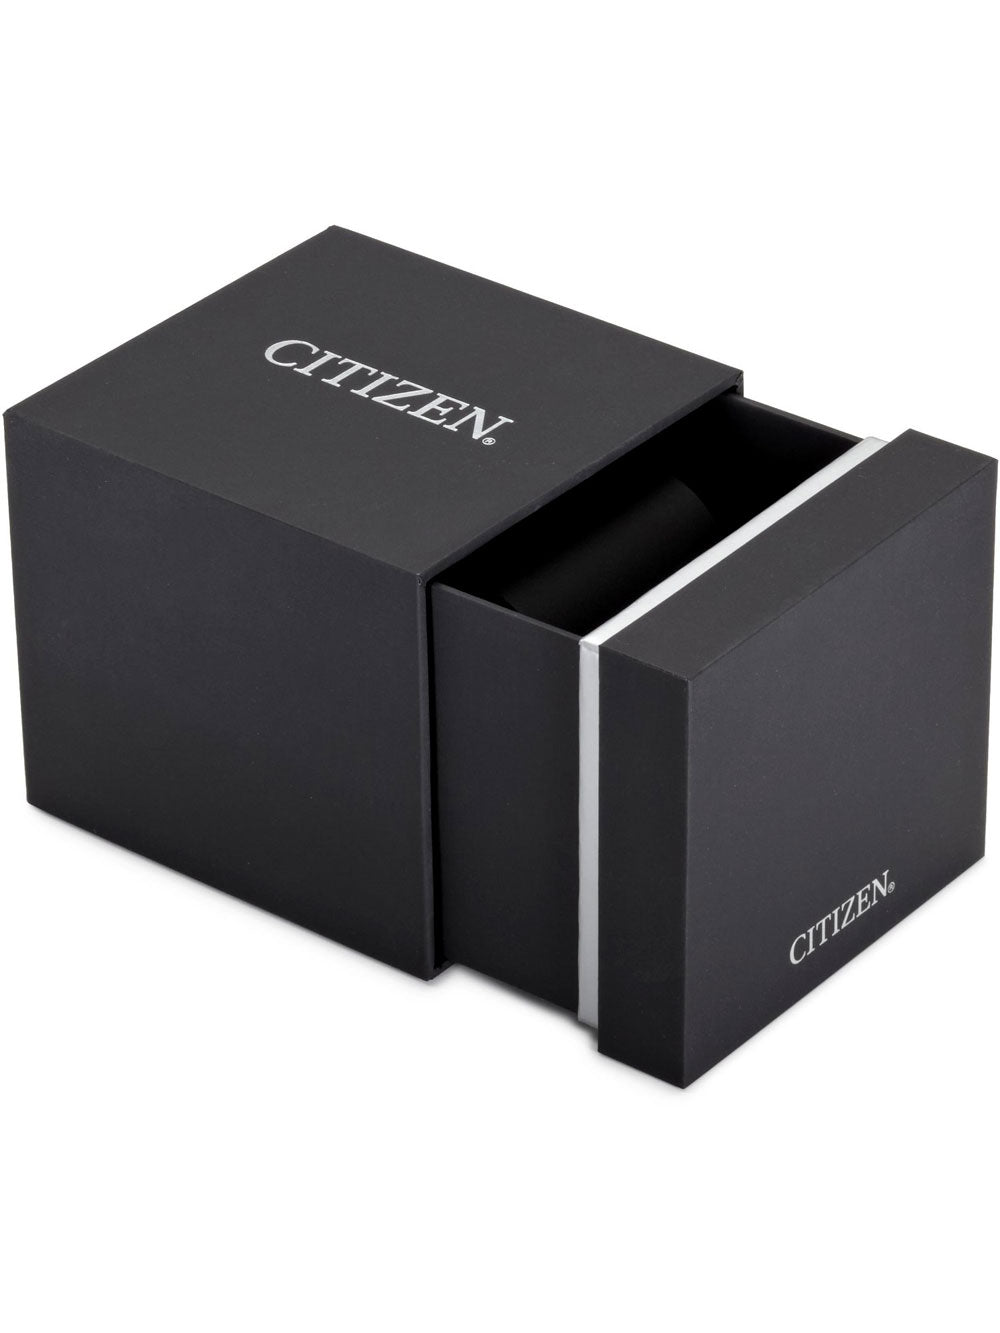 Citizen Eco-Drive BZ1001-86E Bluetooth Smart Watch 45mm 10ATM